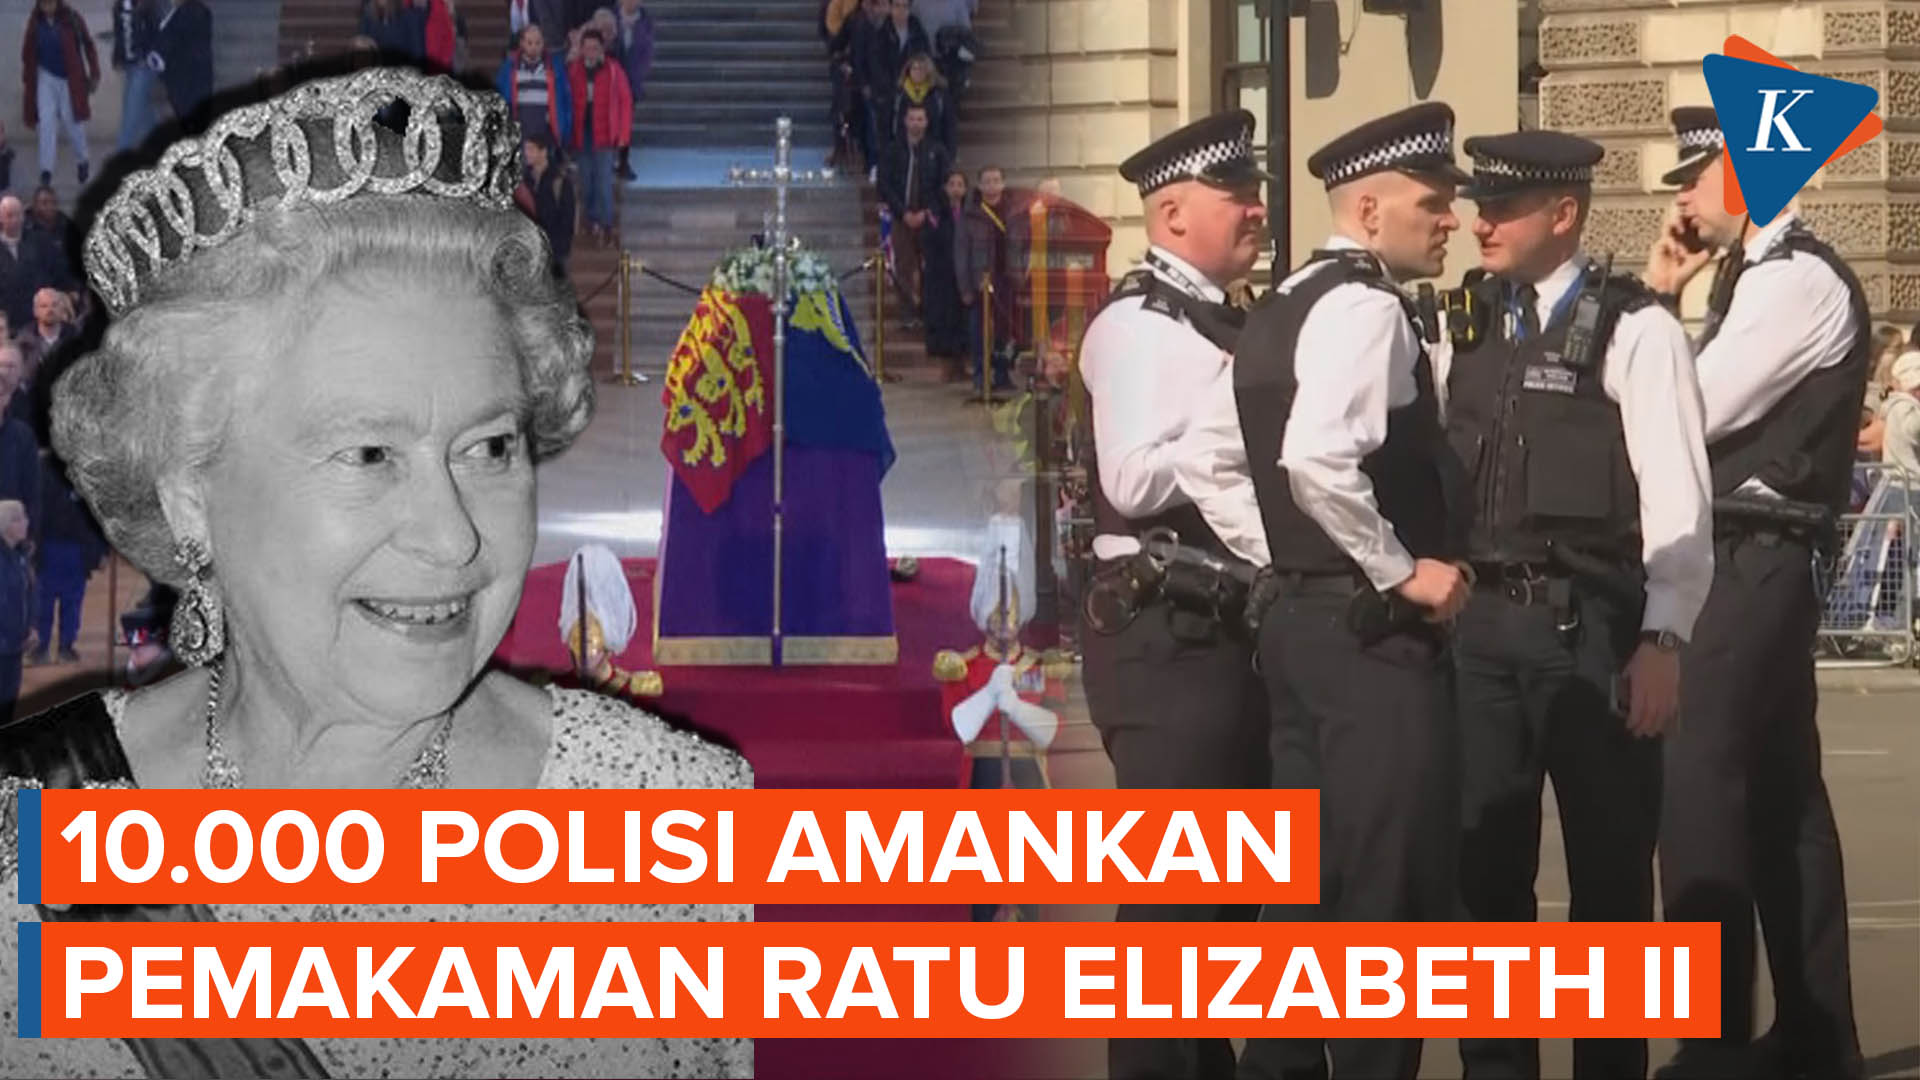 Pengamanan Polisi Super Ketat dalam Pemakaman Ratu Elizabeth II Hari Ini